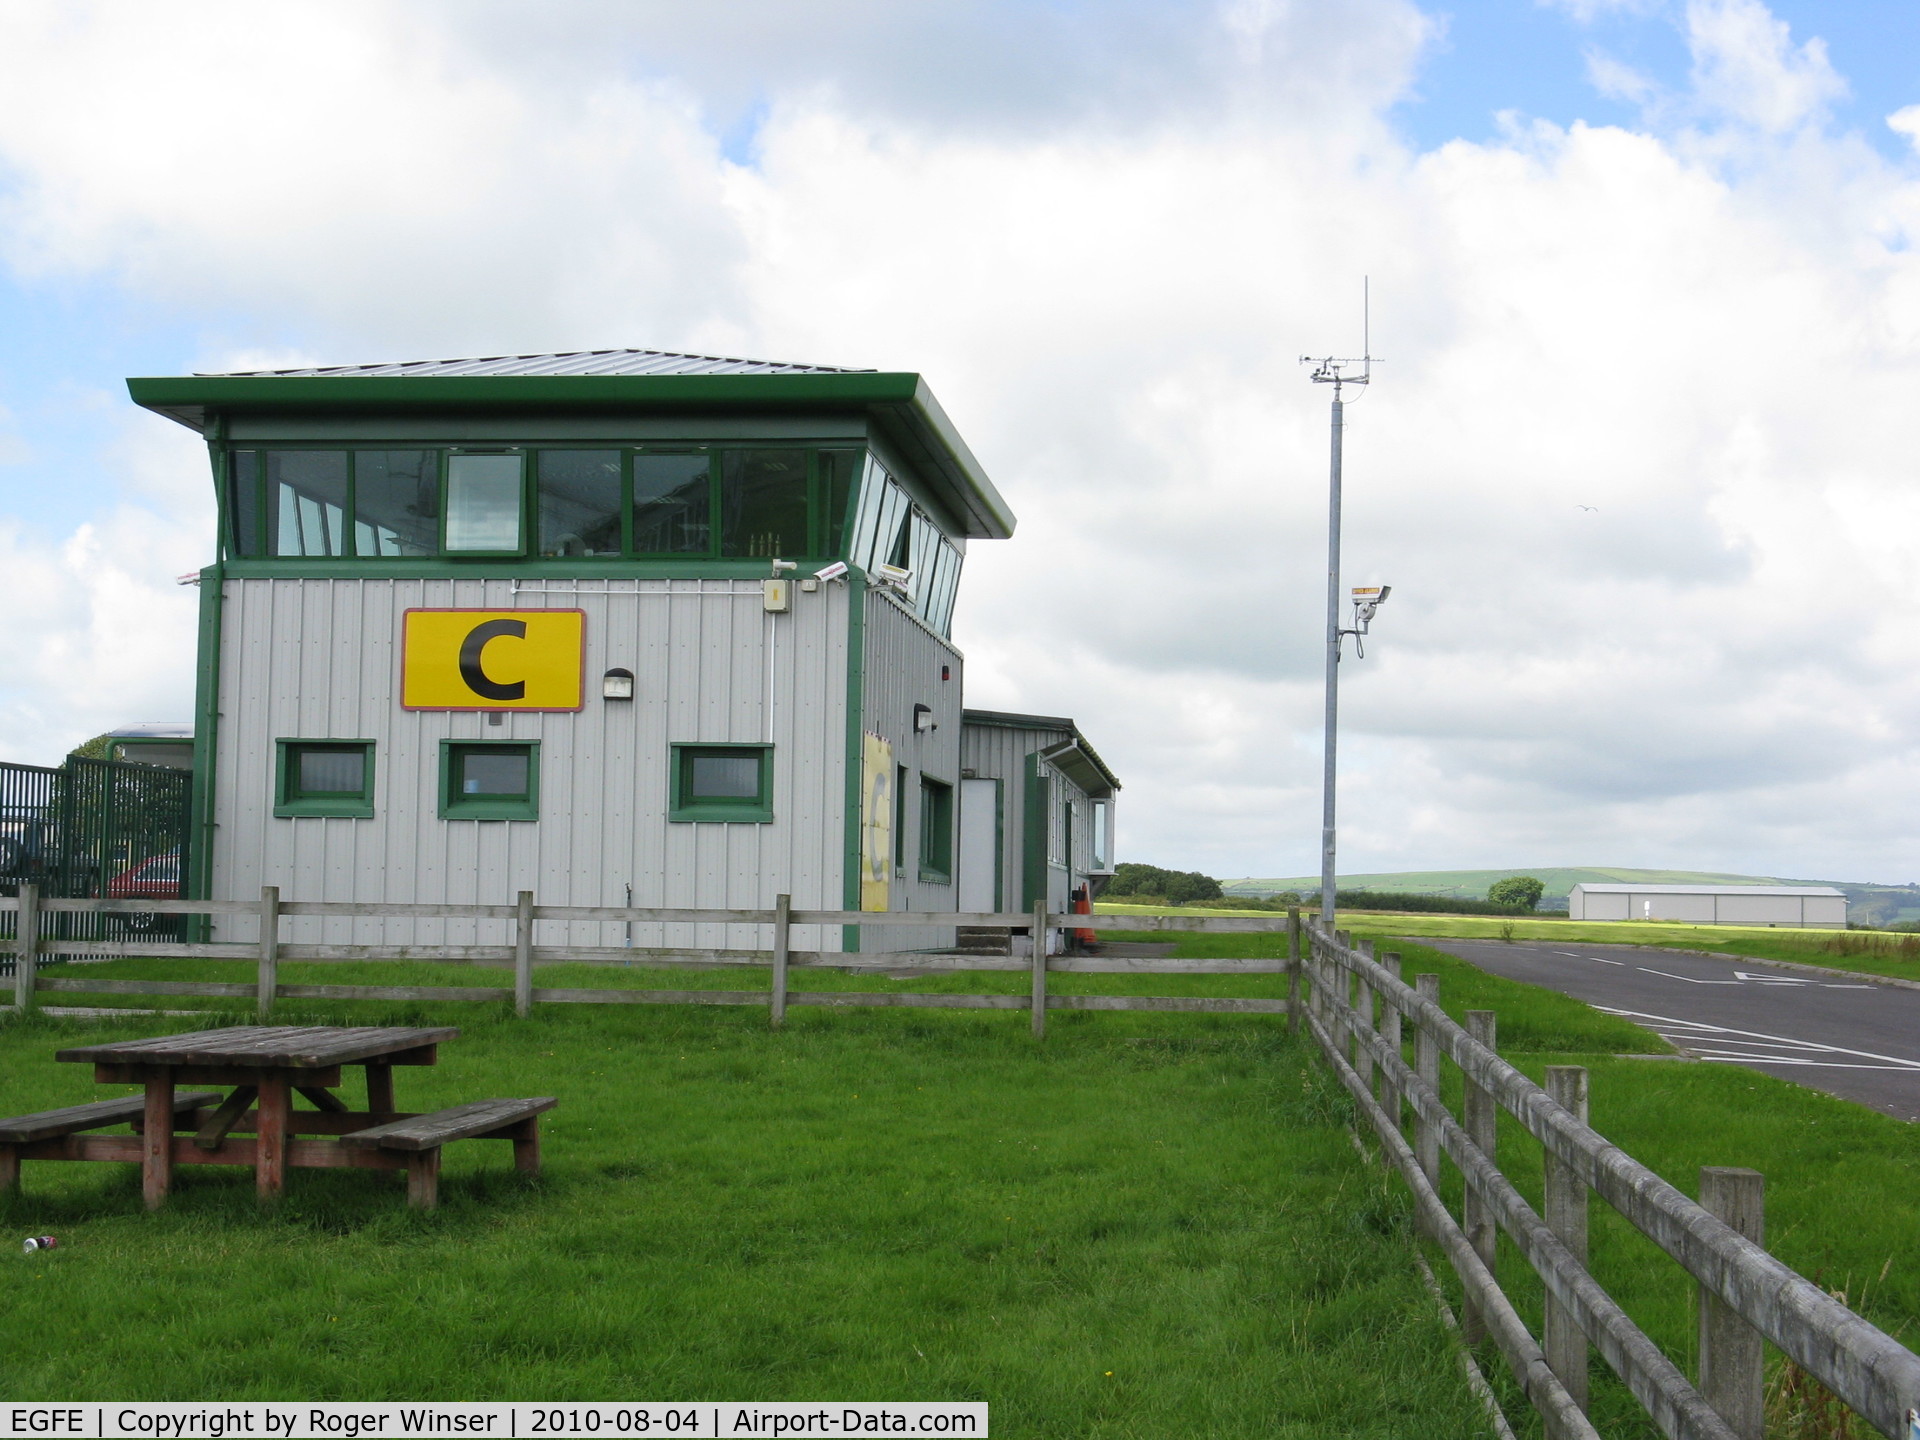 Haverfordwest Aerodrome Airport, Haverfordwest, Wales United Kingdom (EGFE) - Modern control tower at Haverfordwest Airport.